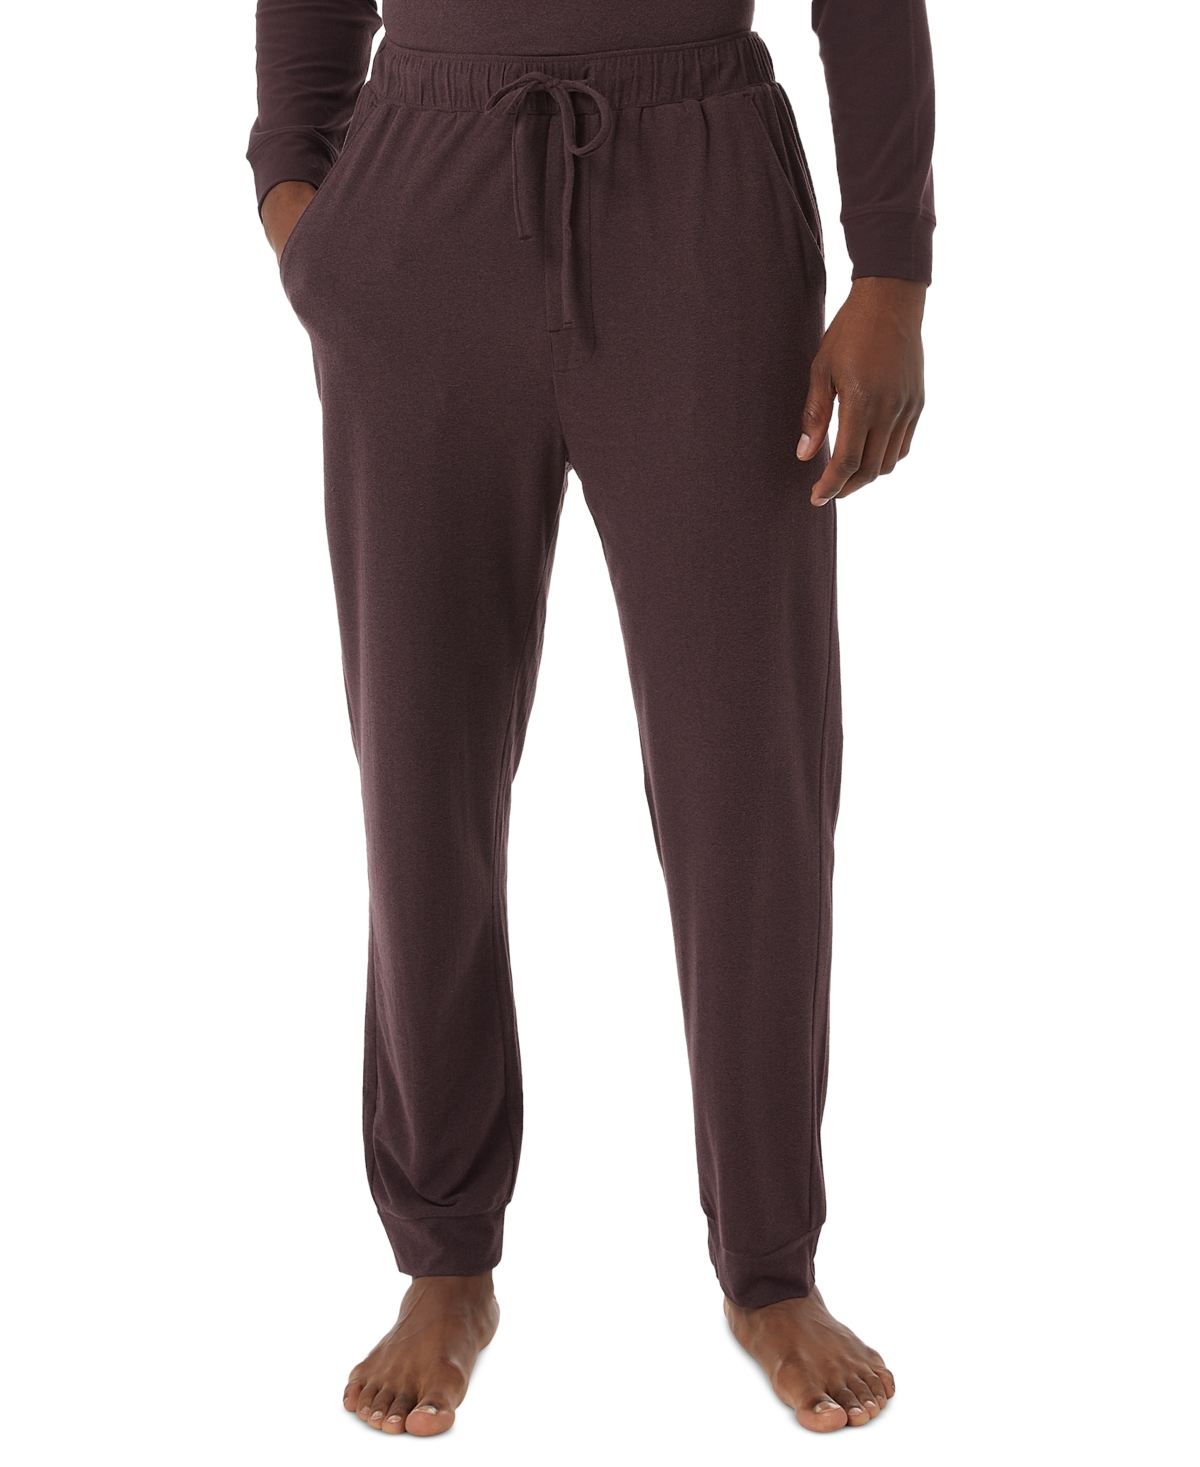 Men's Plush Heat Pajama Pants - Htrichplum